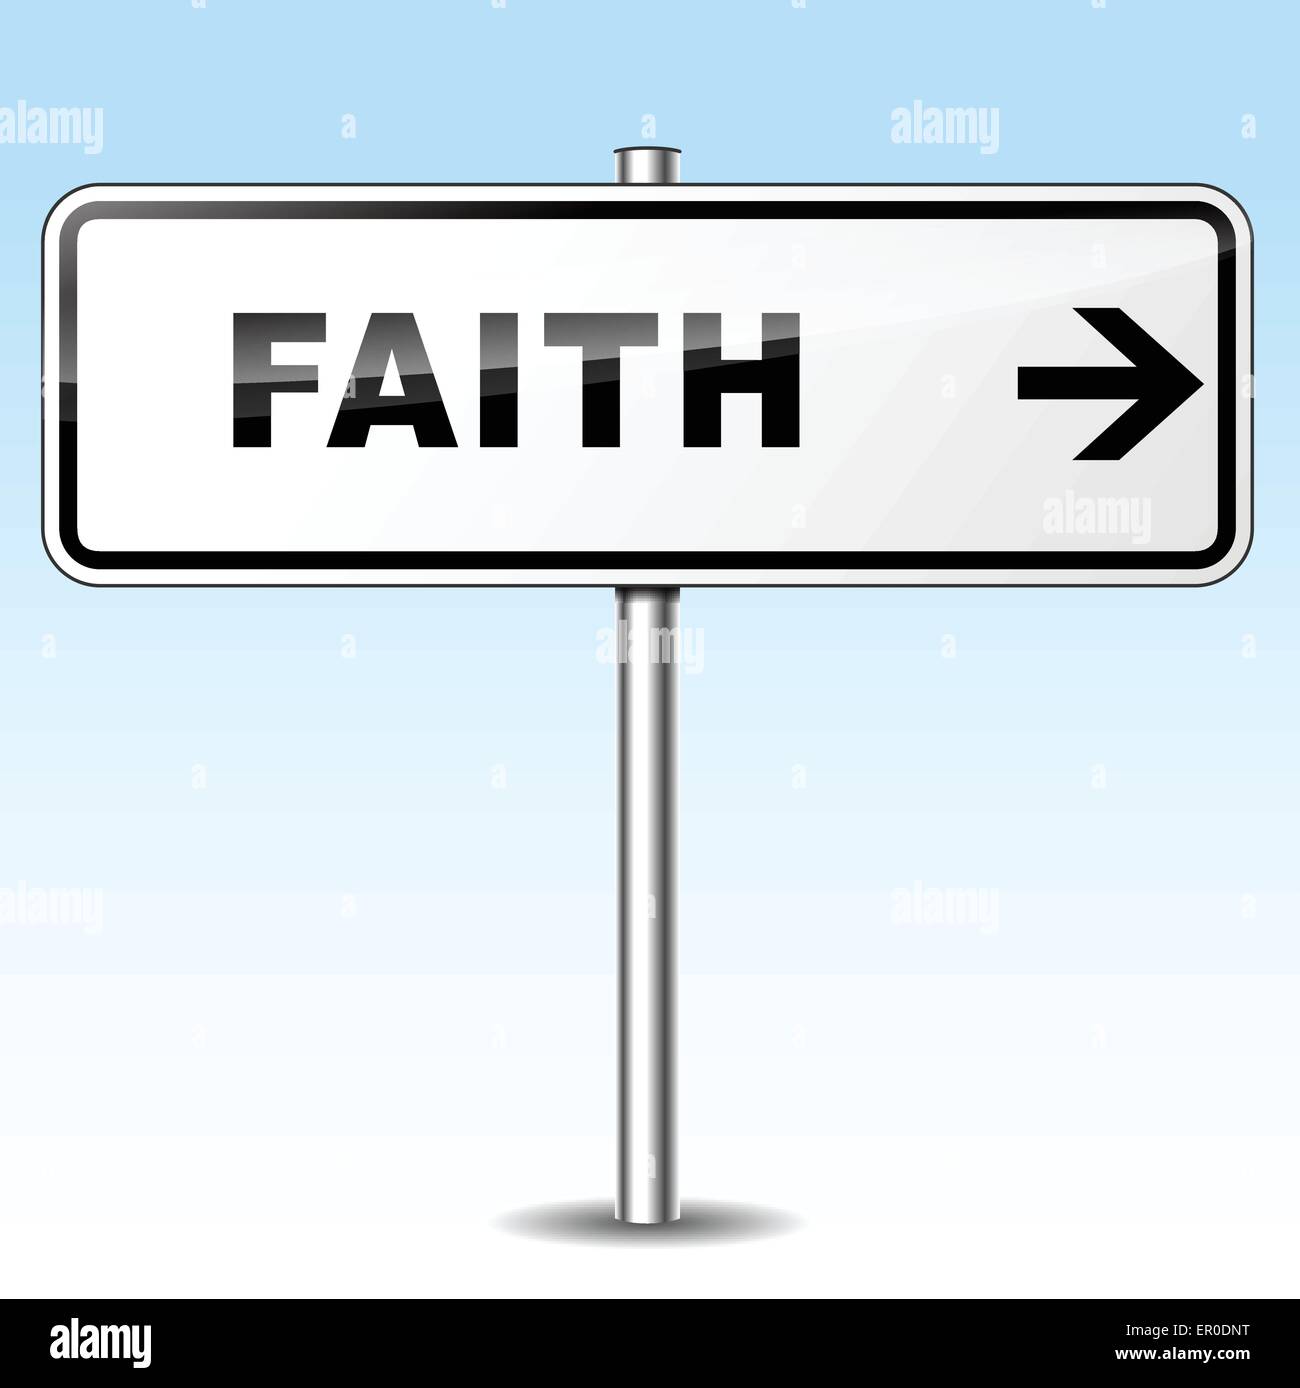 Illustration of faith sign on sky background Stock Vector